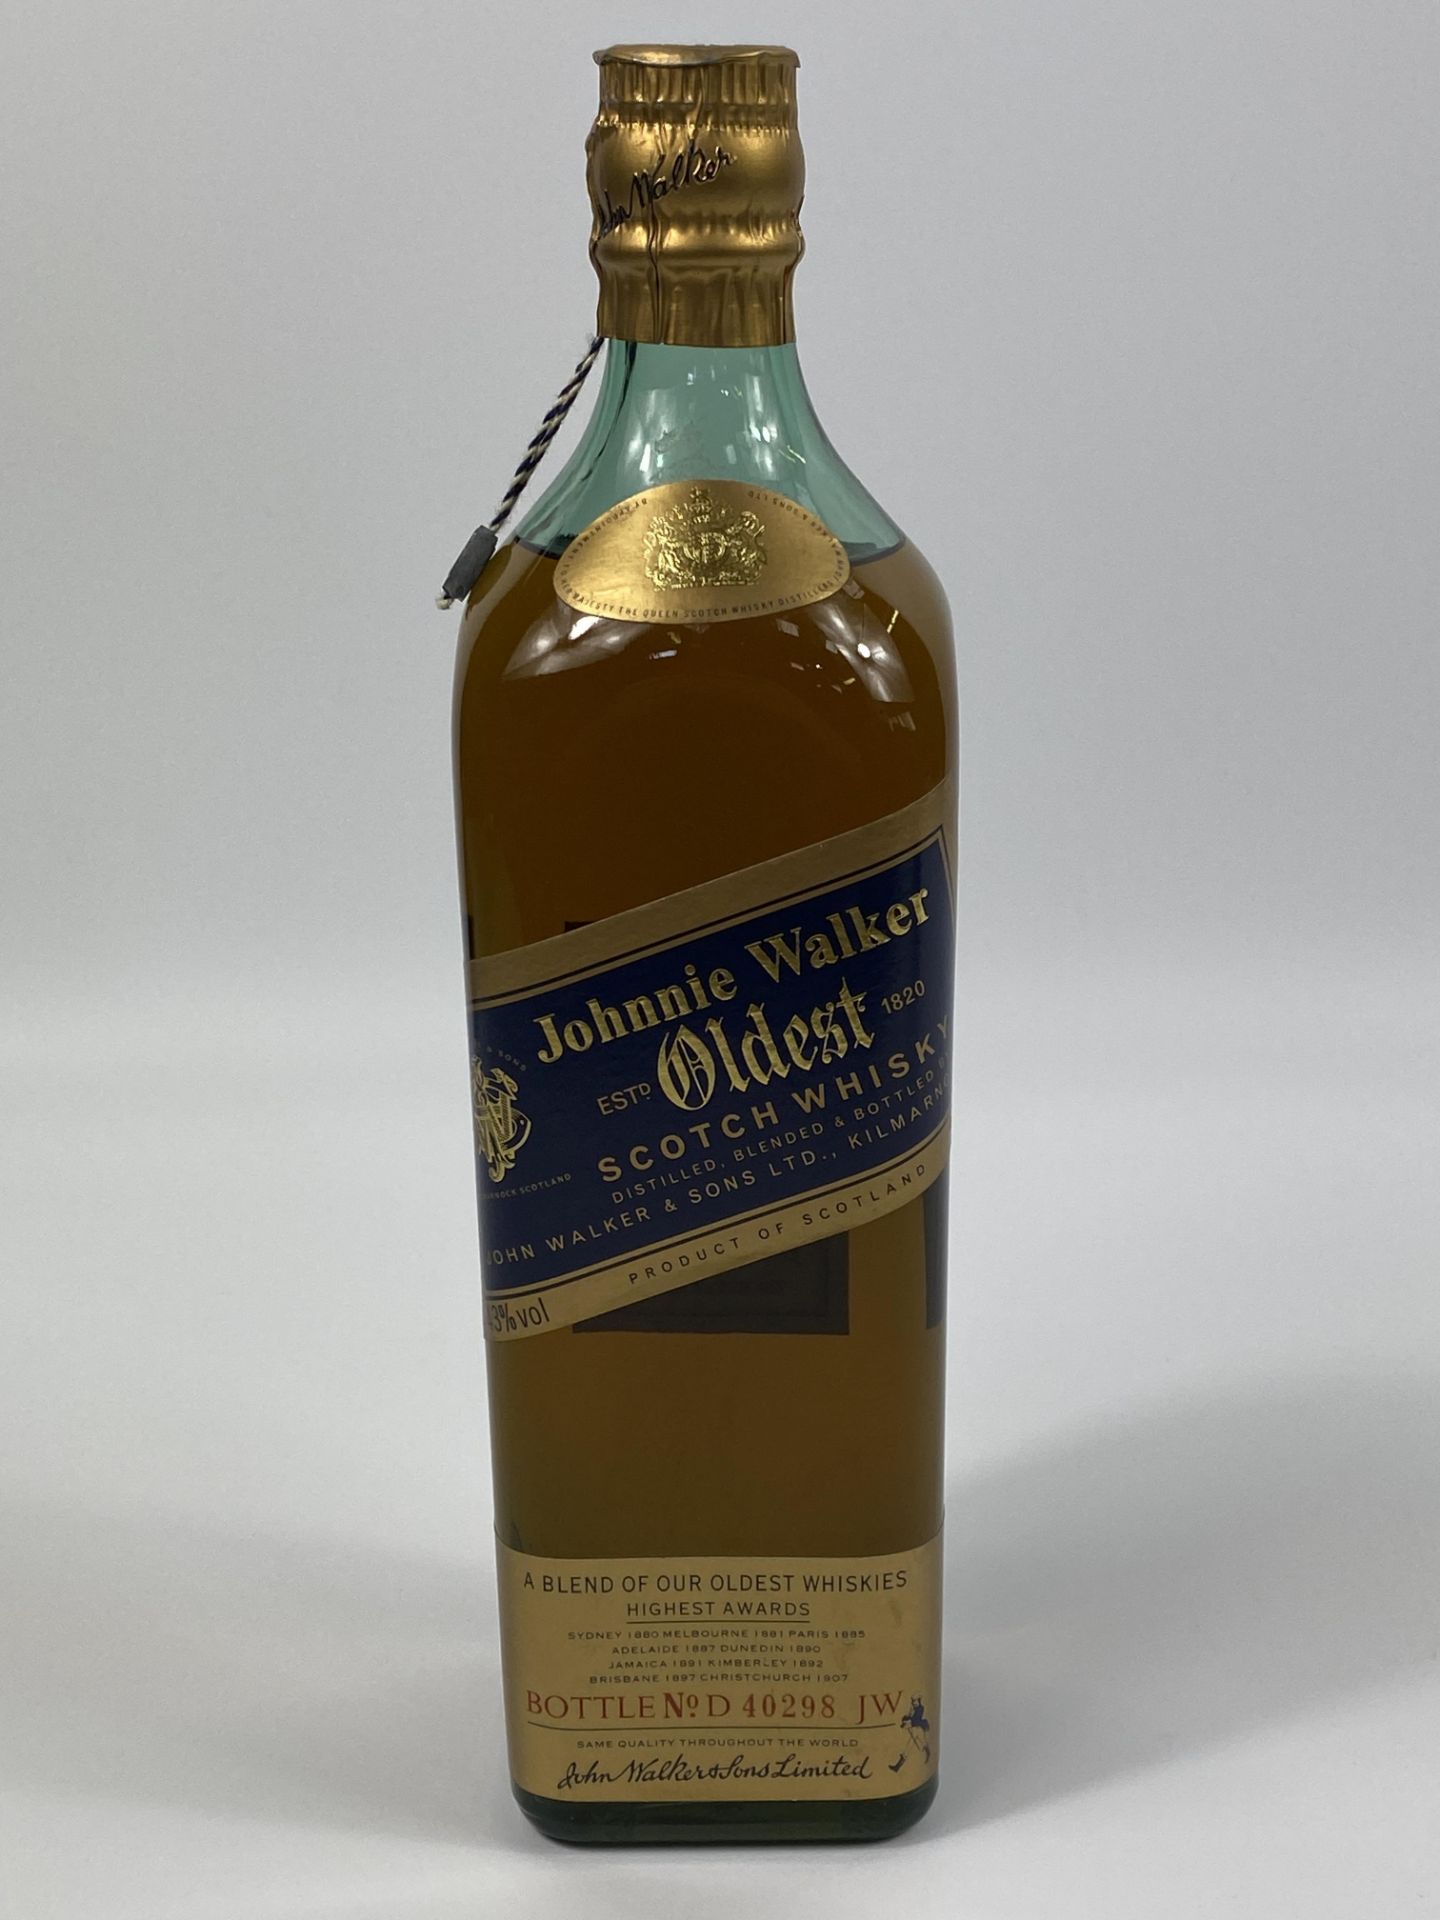 75cl bottle of Johnnie Walker Oldest Scotch whisky; bottle of Johnnie Walker Black Label - Image 4 of 5